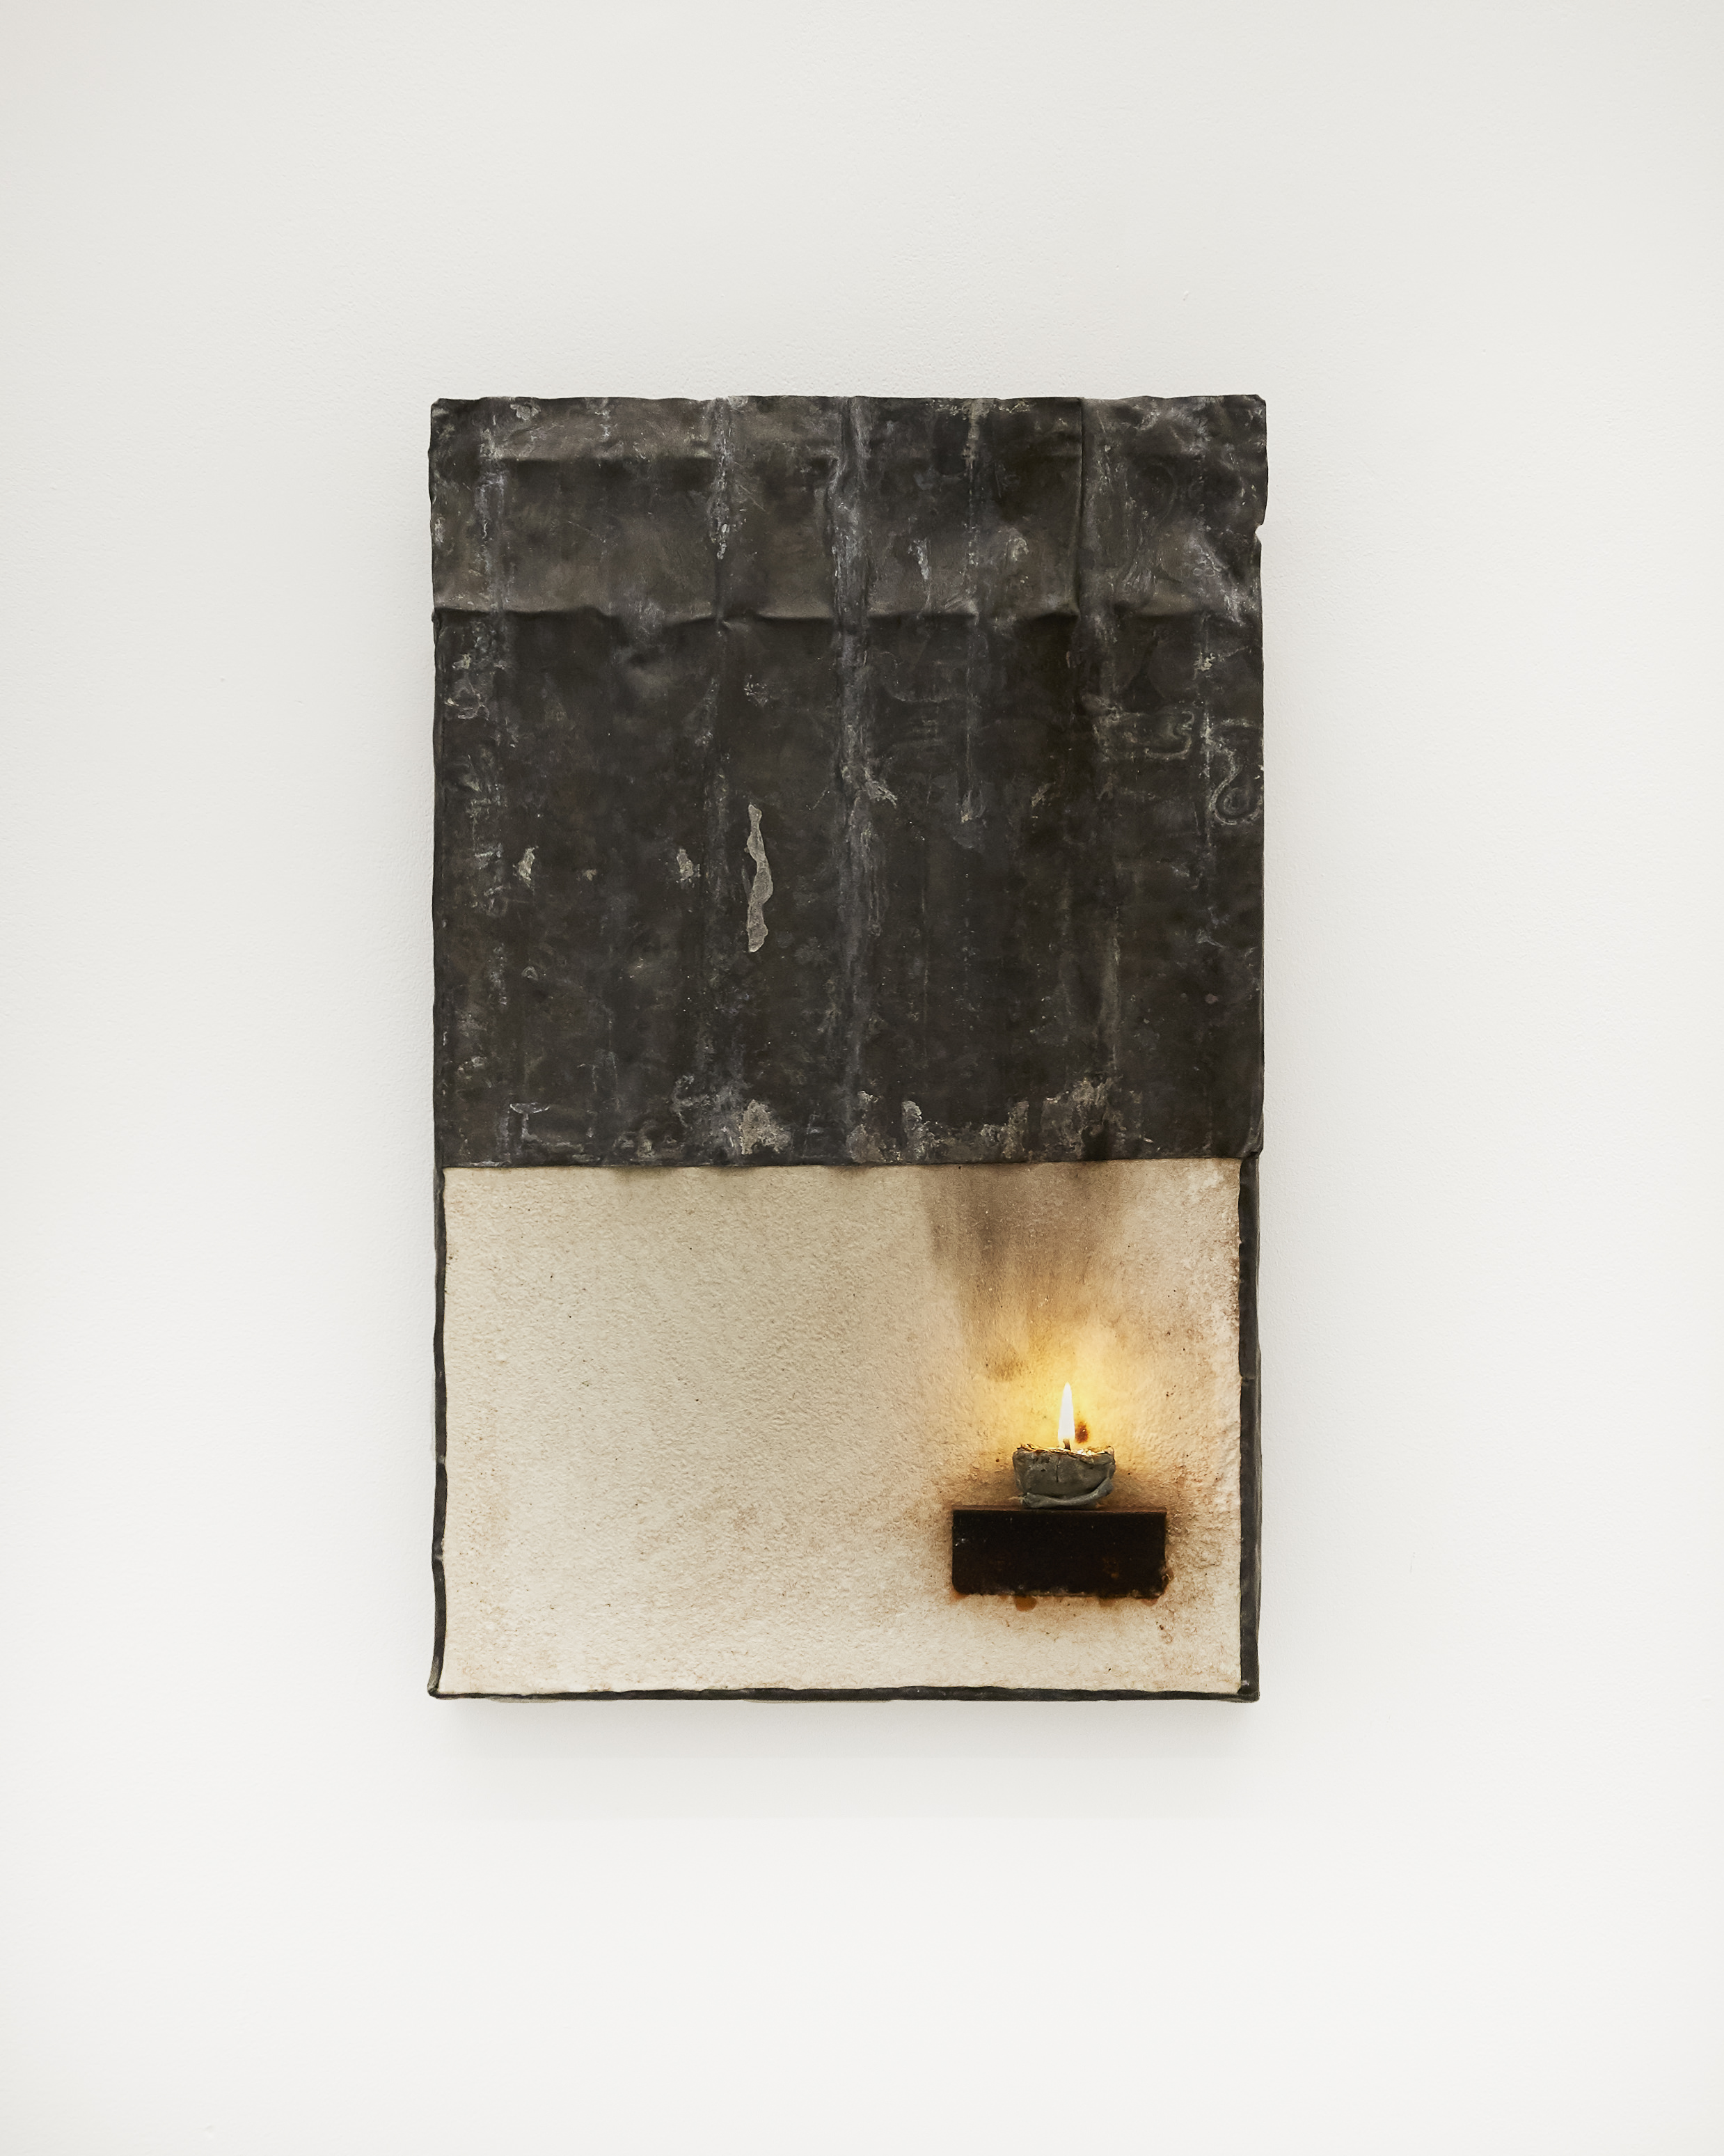 Pier Paolo Calzolari, Senza titolo, 1970s, salt, lead, candle, 49.5 x 31 cm.1